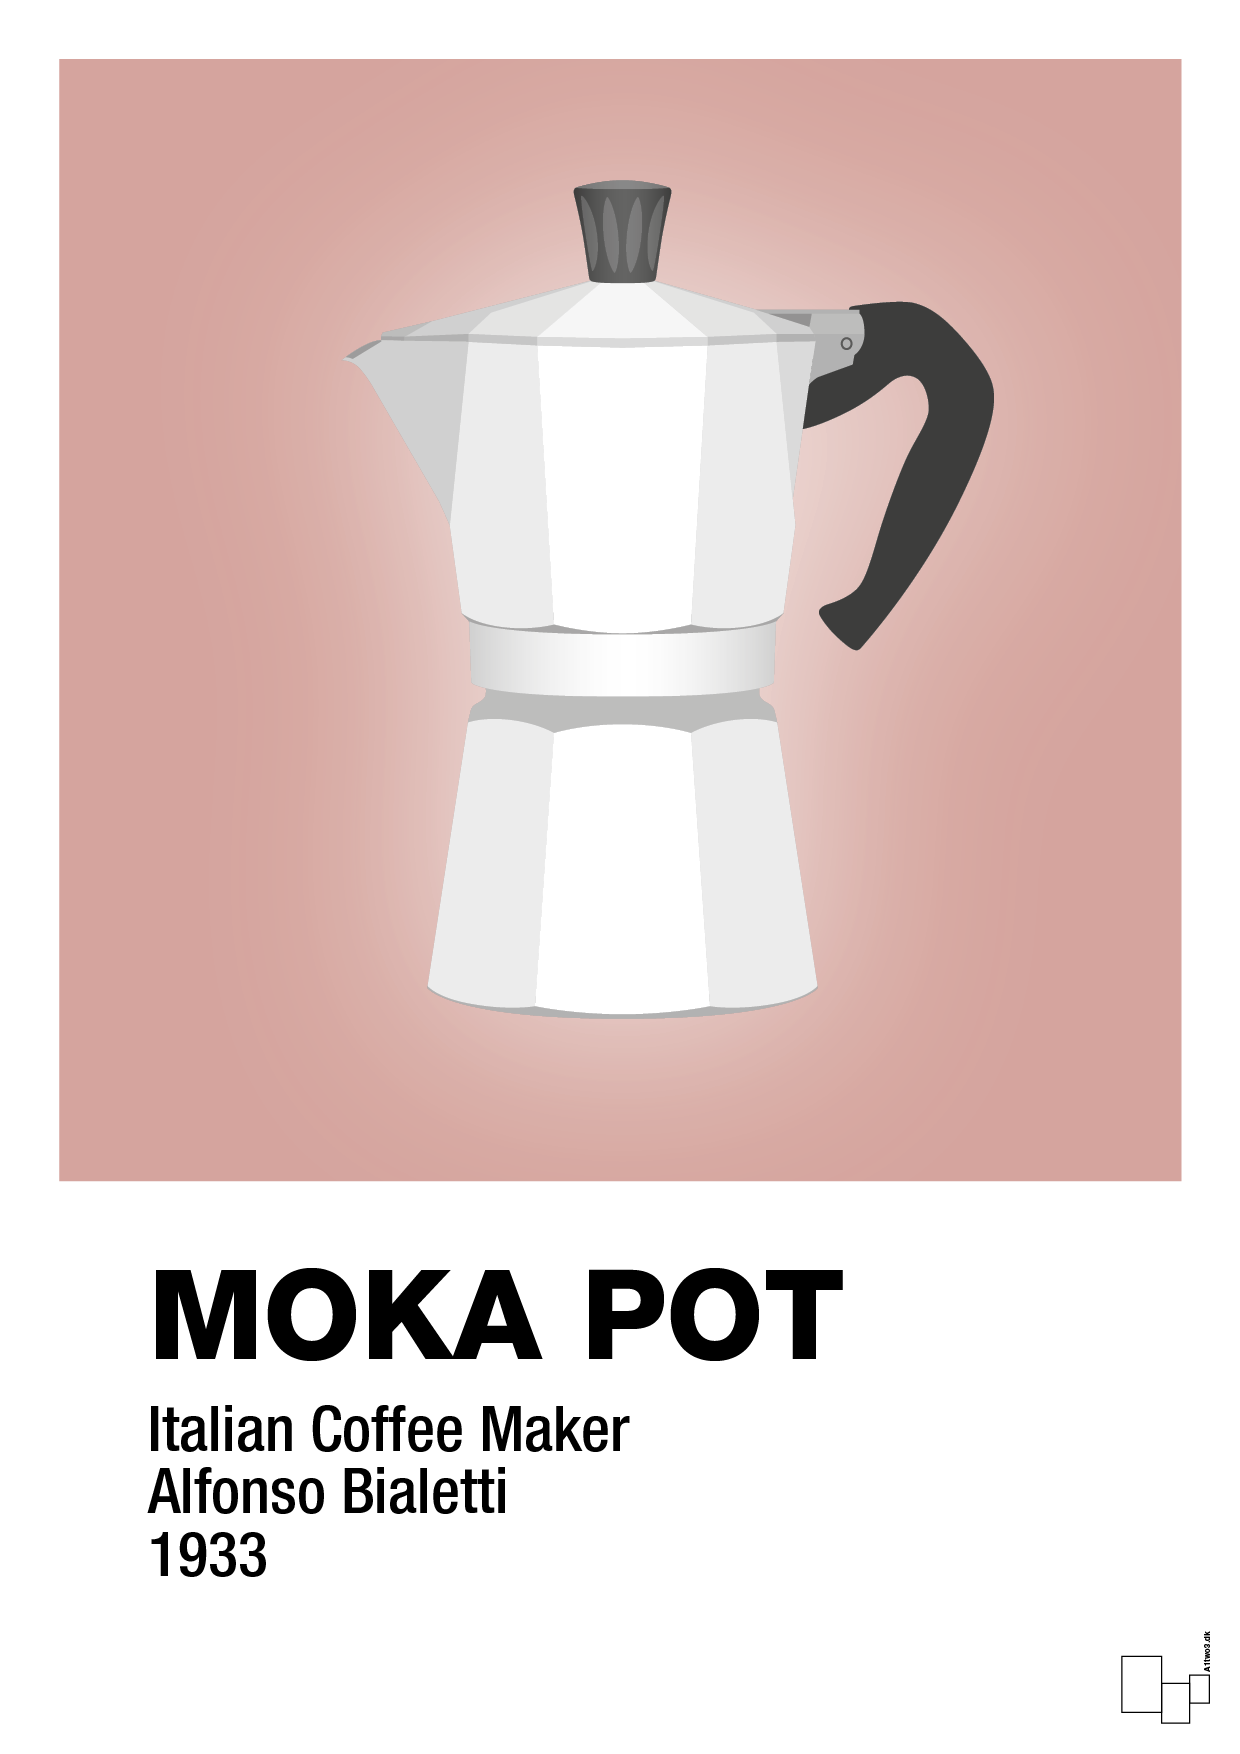 moka pot - Plakat med Mad & Drikke i Bubble Shell